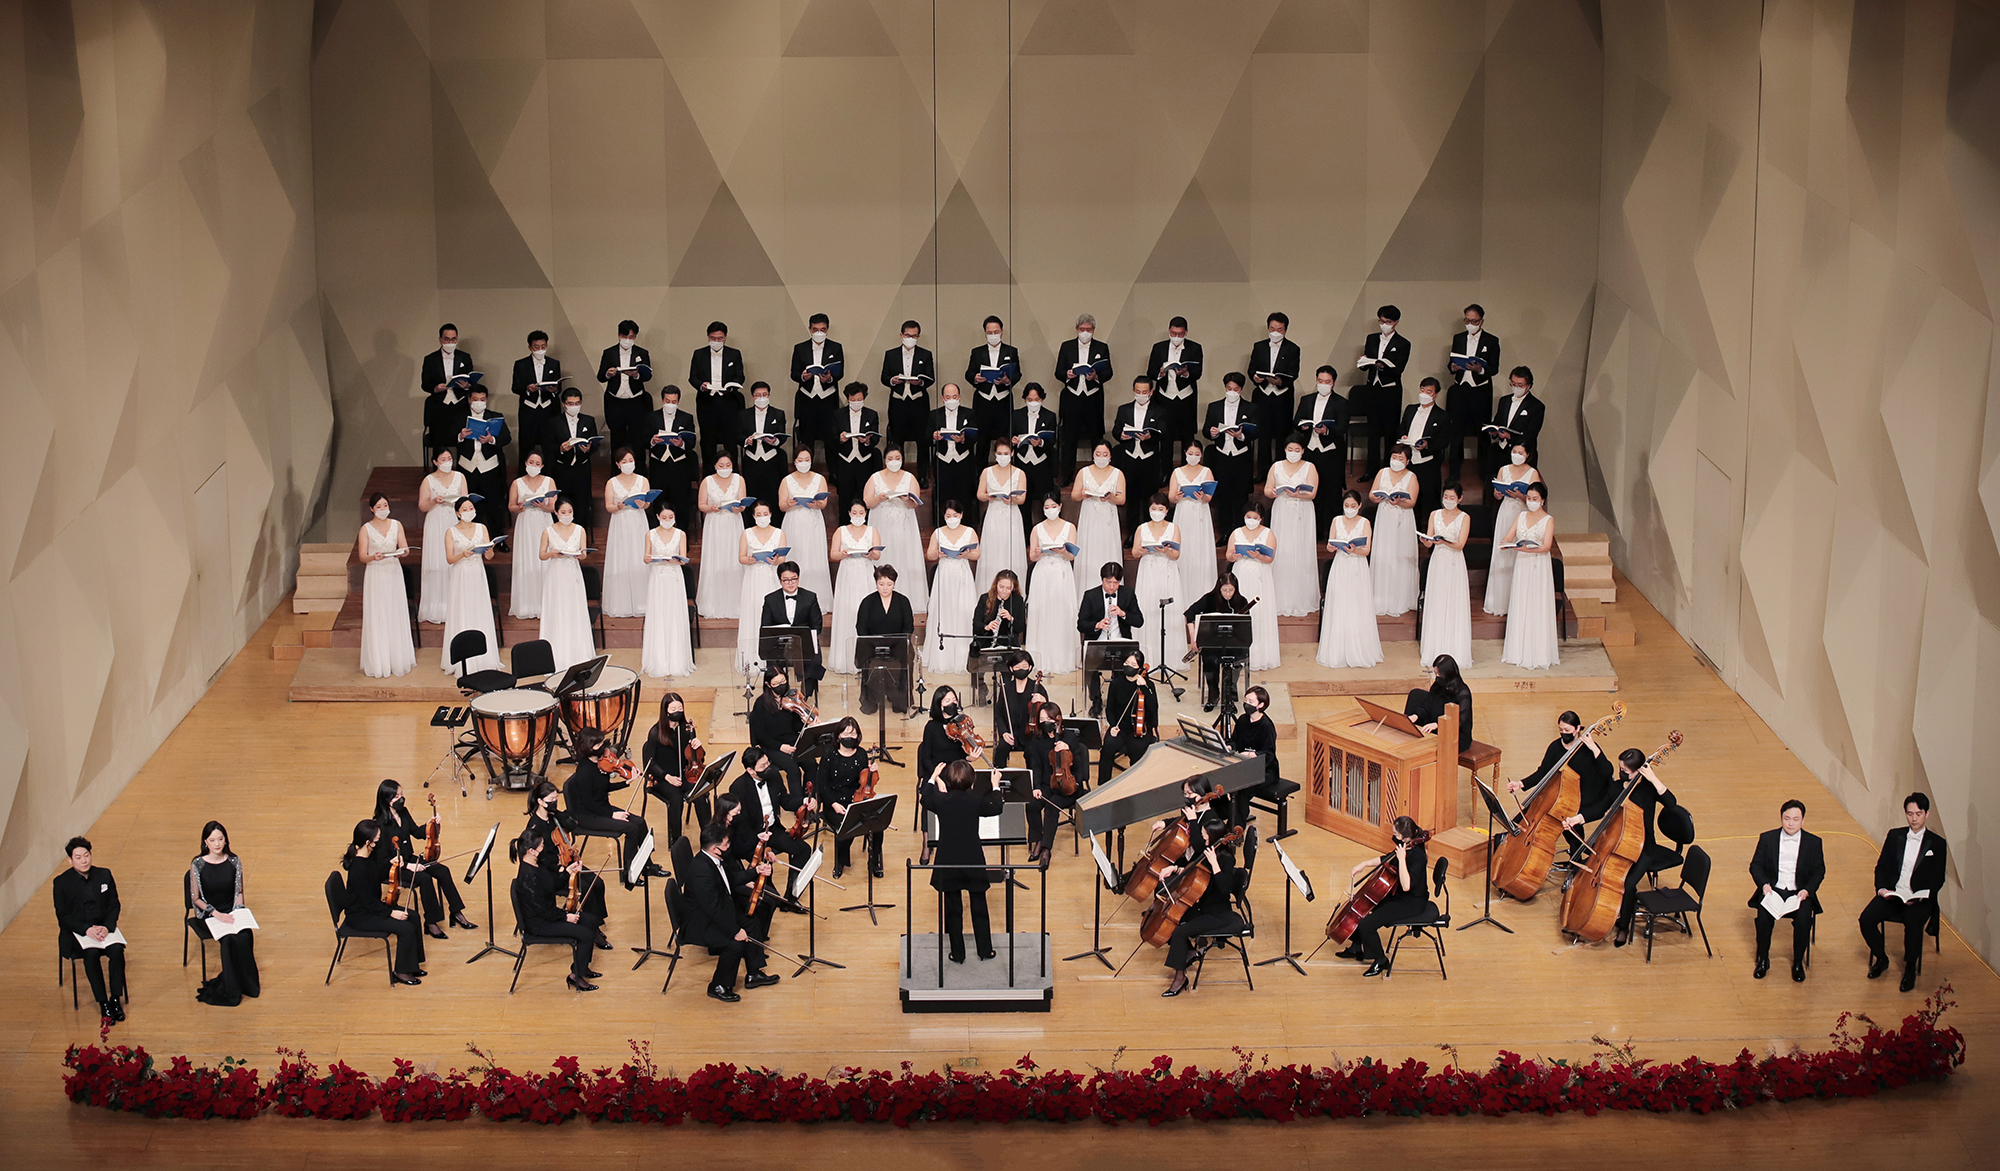 [12.16]Bucheon Civic Chorale 155th Subscription Concert - Handel, Messiah